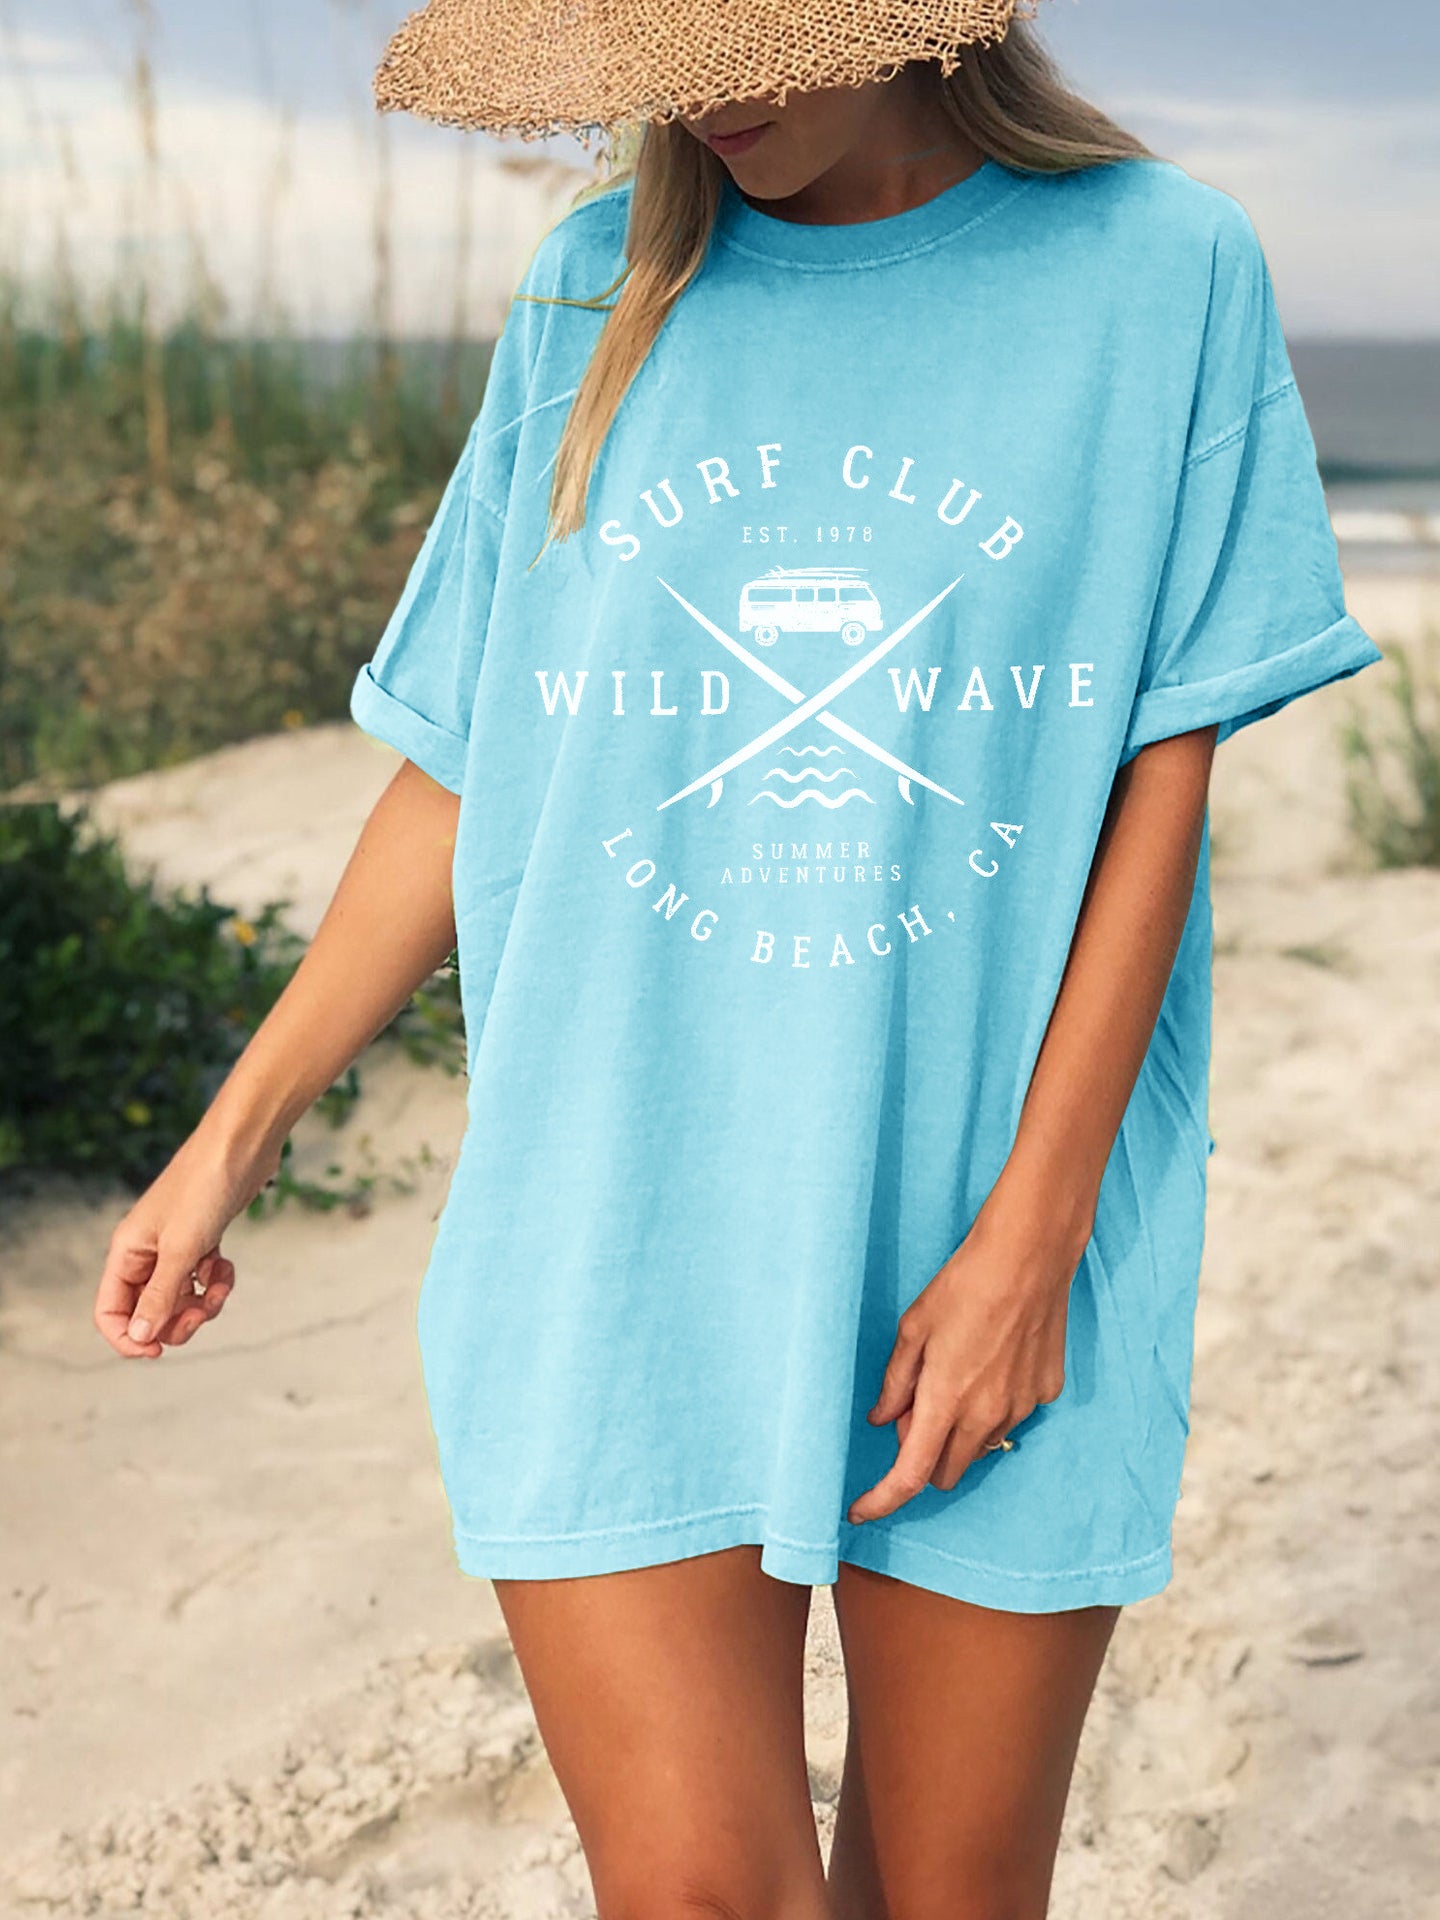 Ladies Surf Club Wild Wave Long Beach CA Shirts